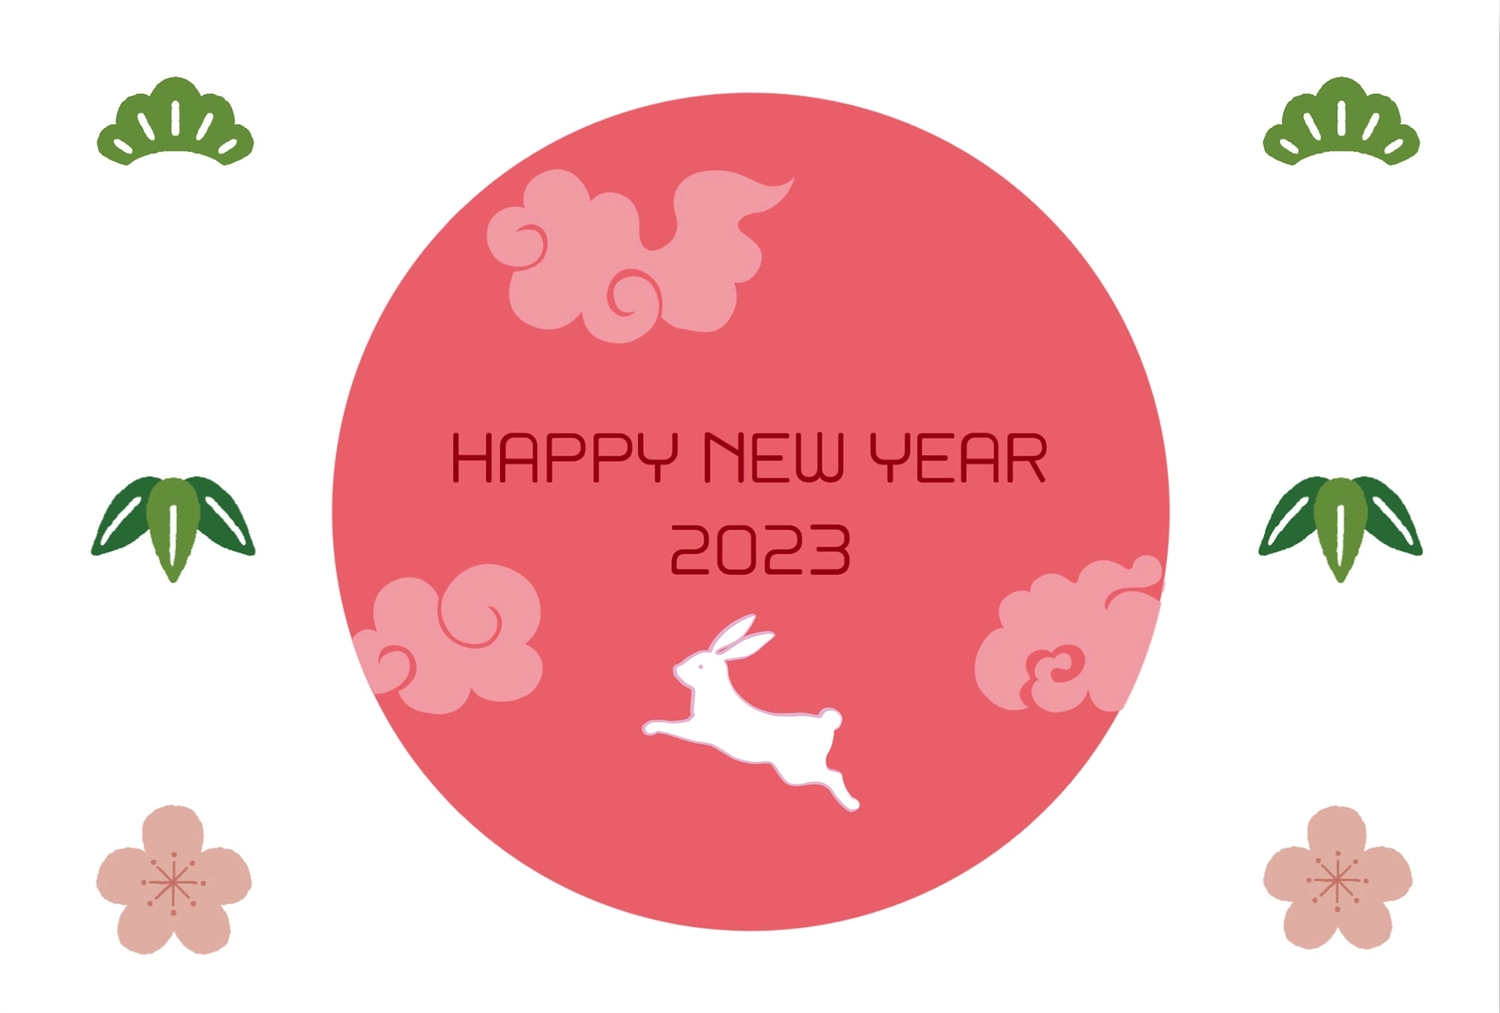 松竹梅とうさぎの年賀状, Thiệp chúc mừng năm mới, 令和, 英文, Thiệp năm mới mẫu